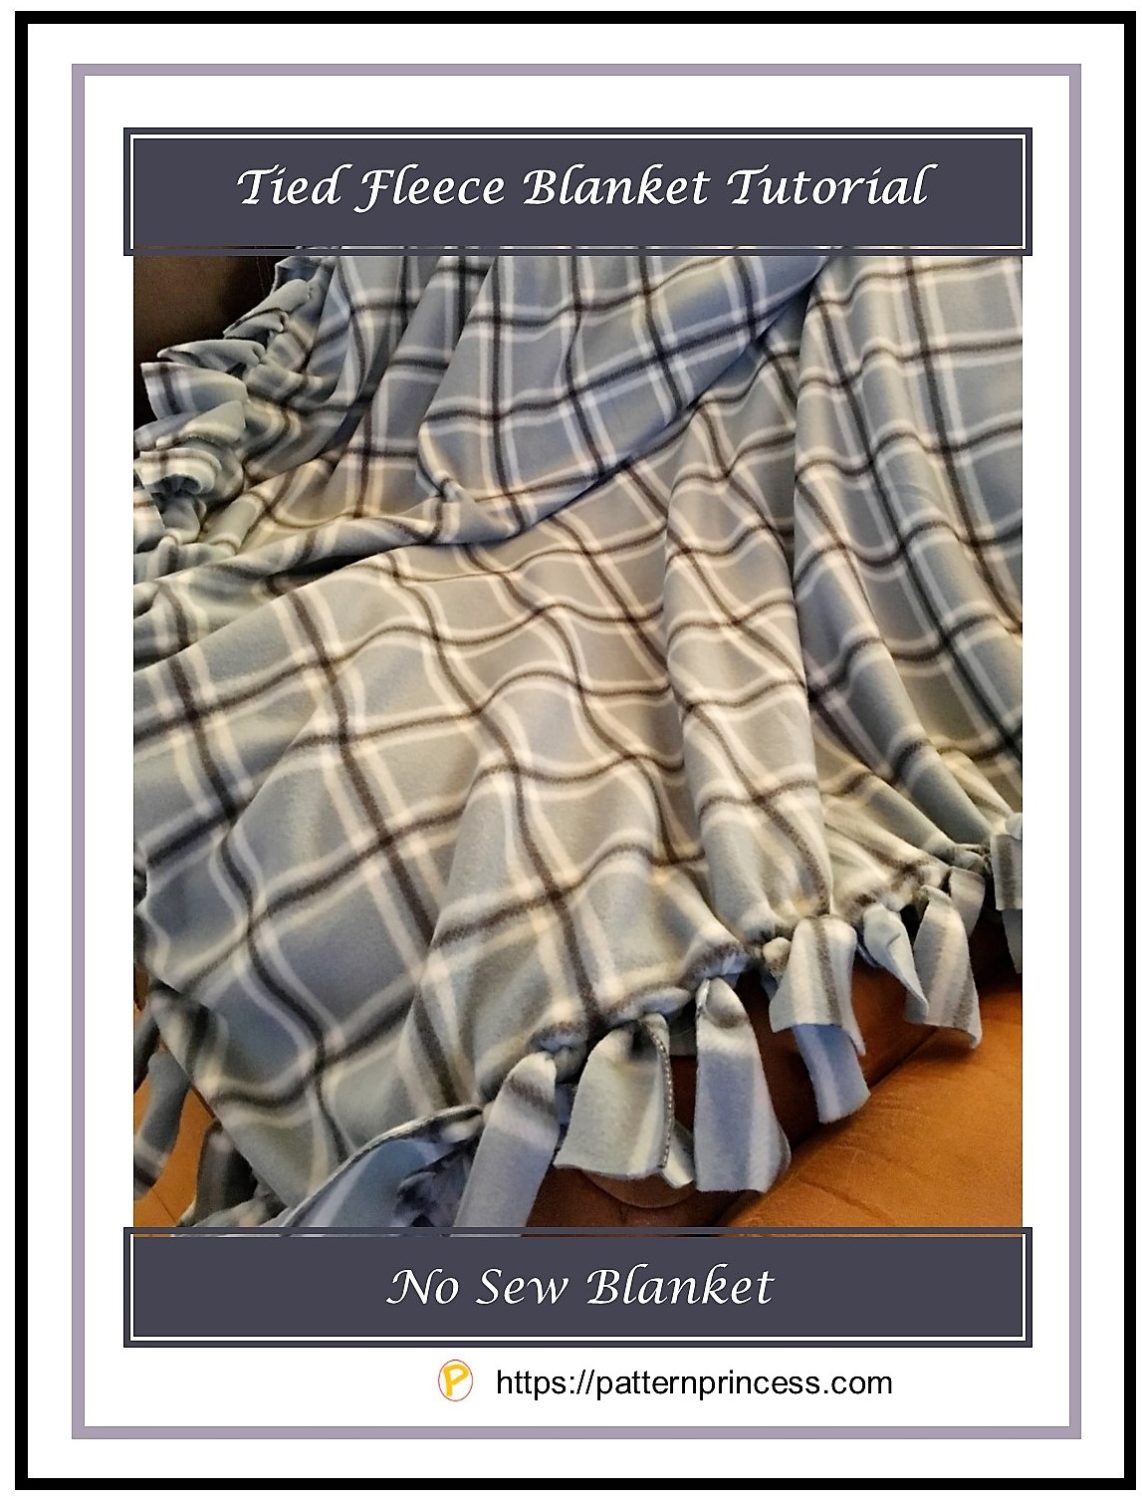 Tied Fleece Blanket Tutorial Pattern Princess